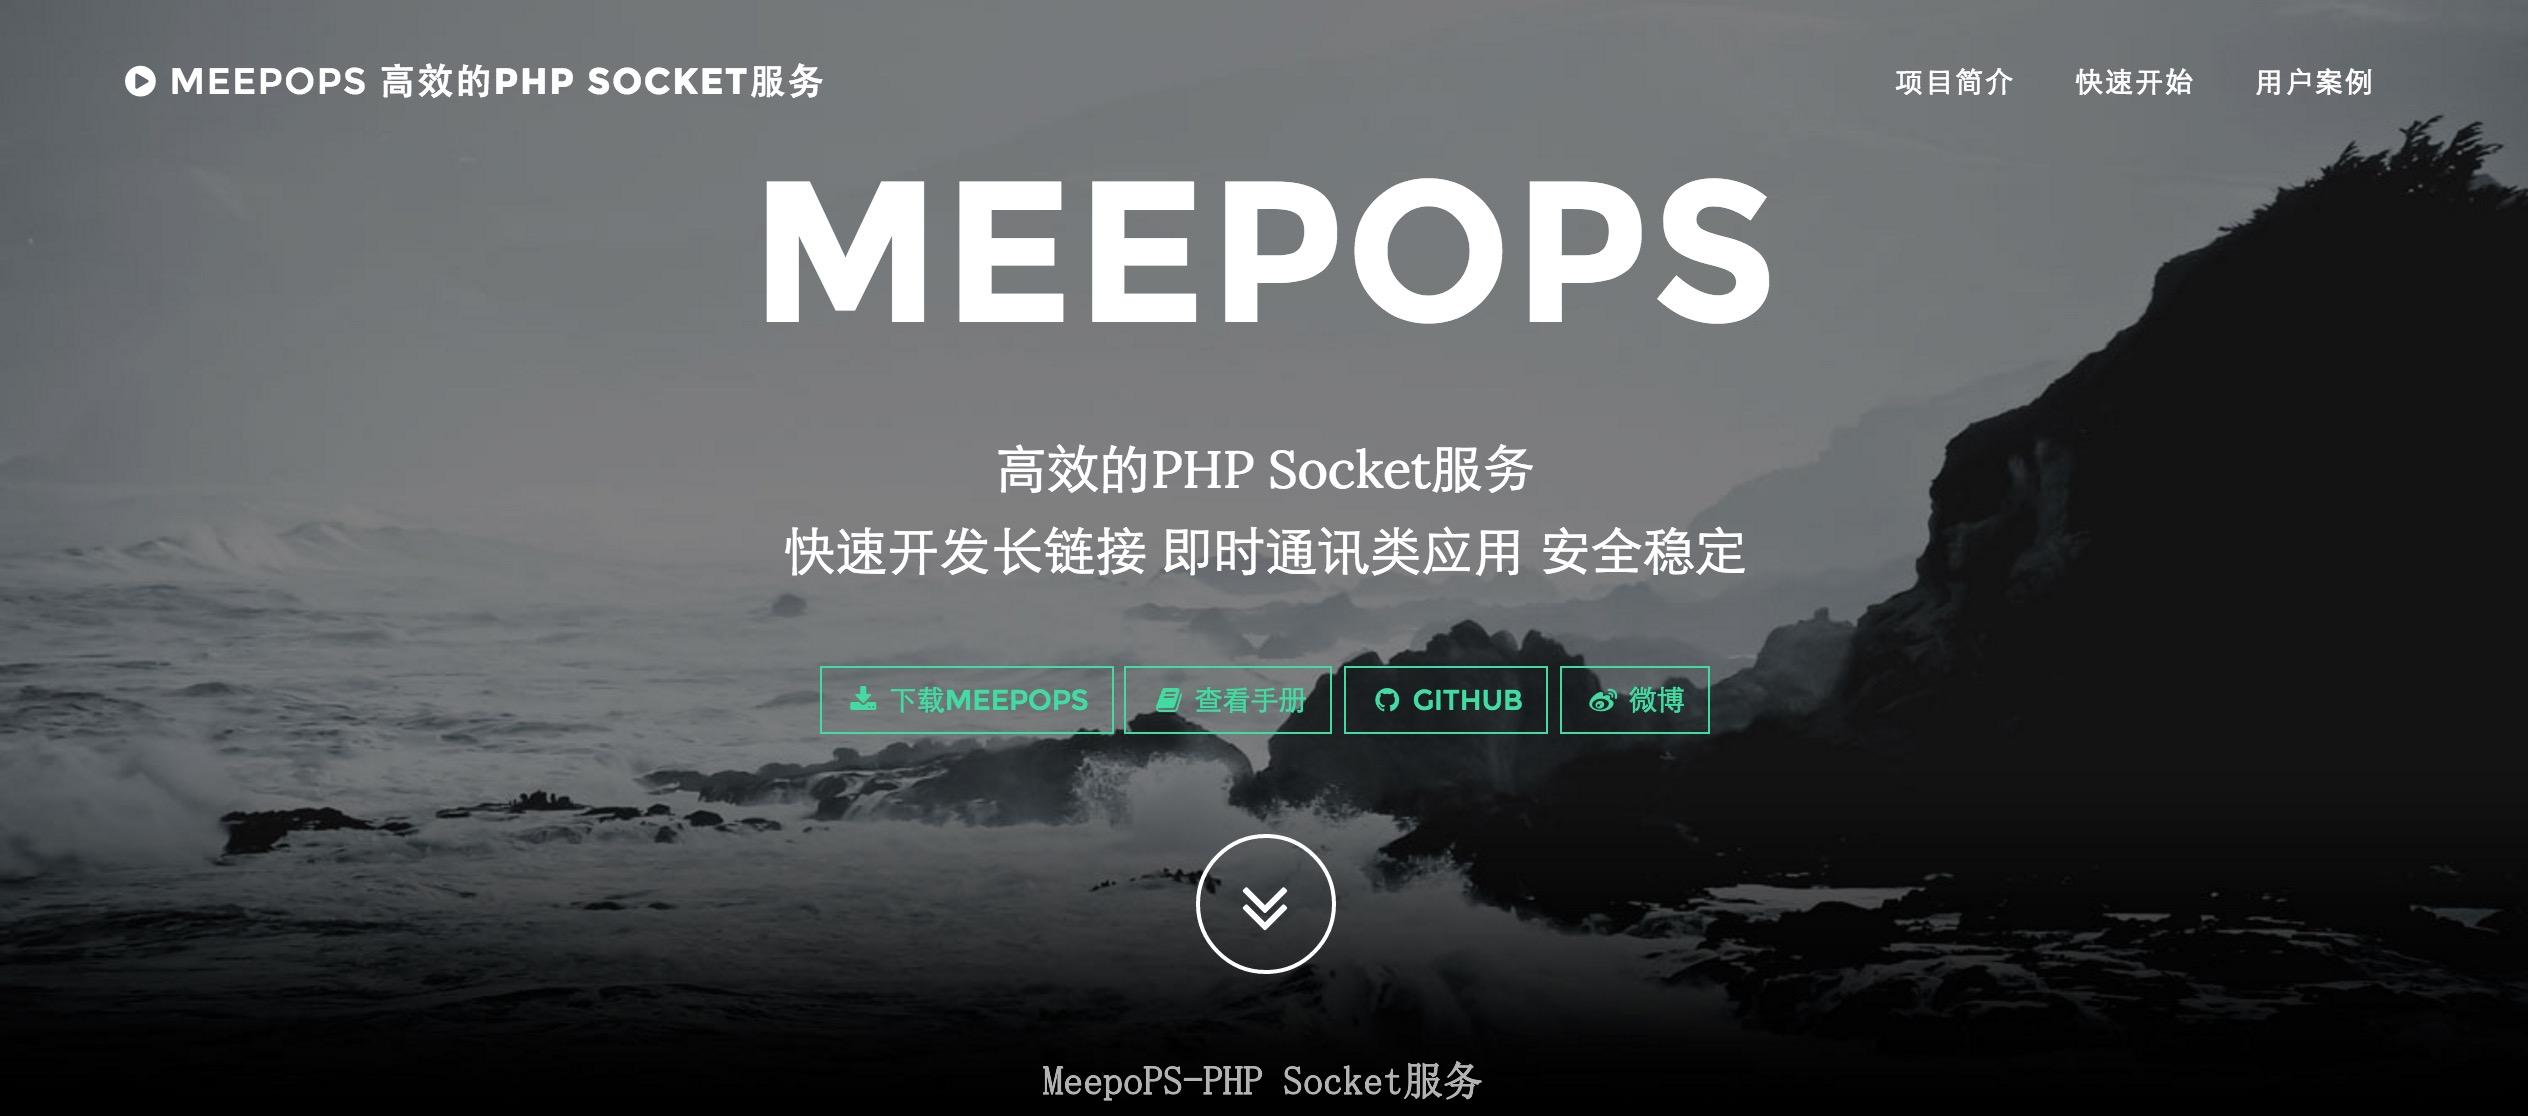 MeepoPS官网首页